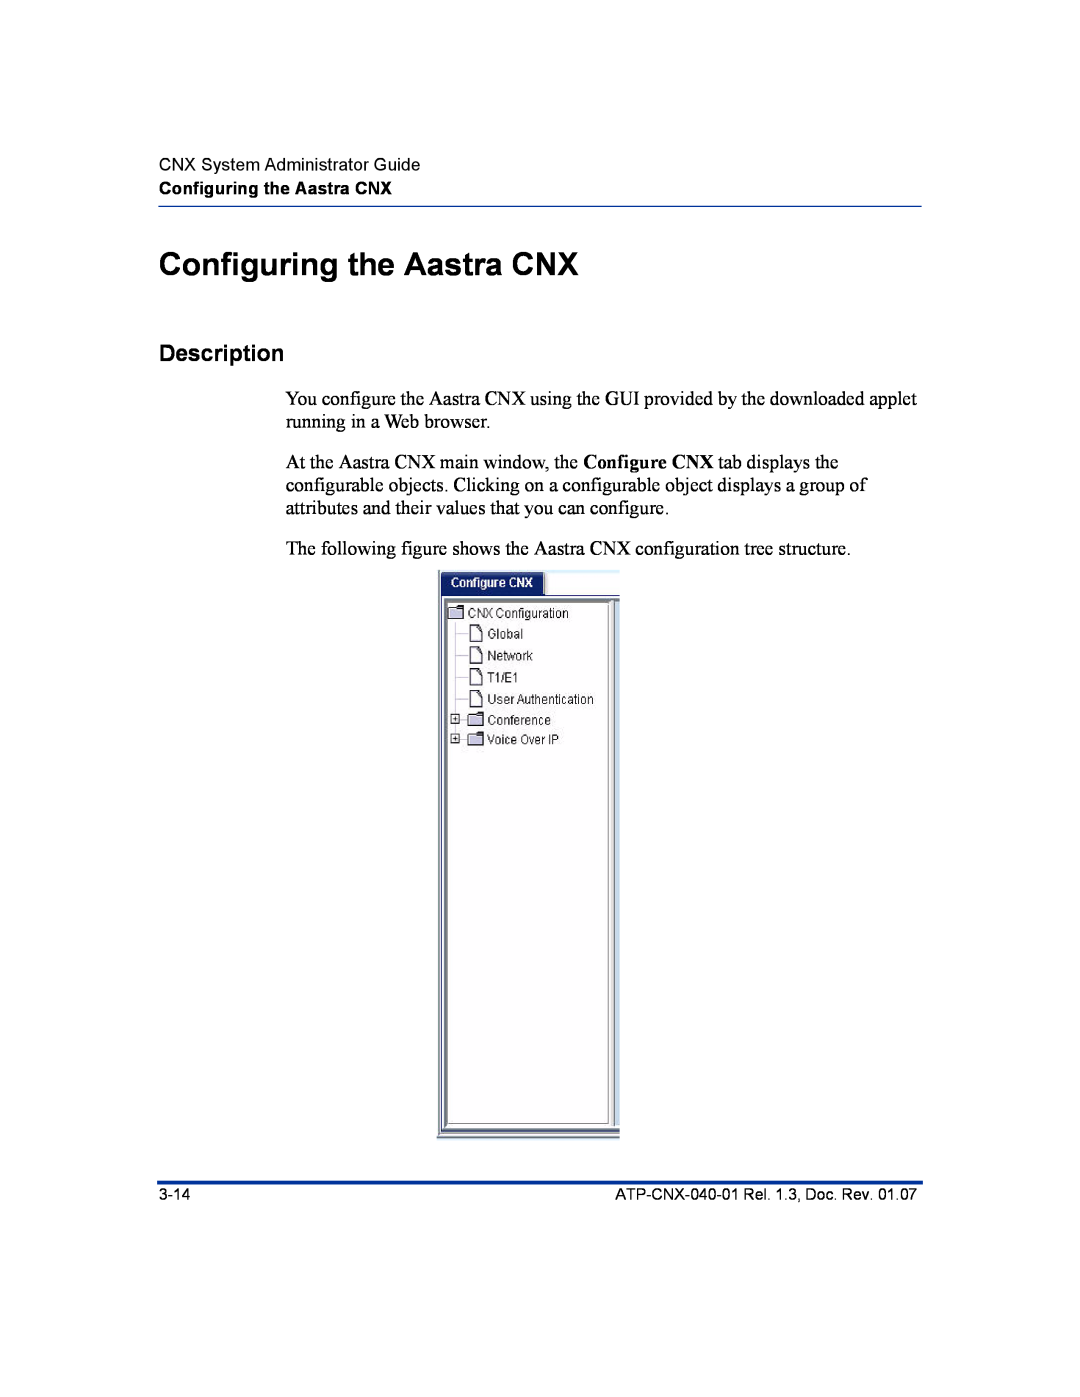 Aastra Telecom ATP-CNX-040-01 manual Configuring the Aastra CNX, Description 